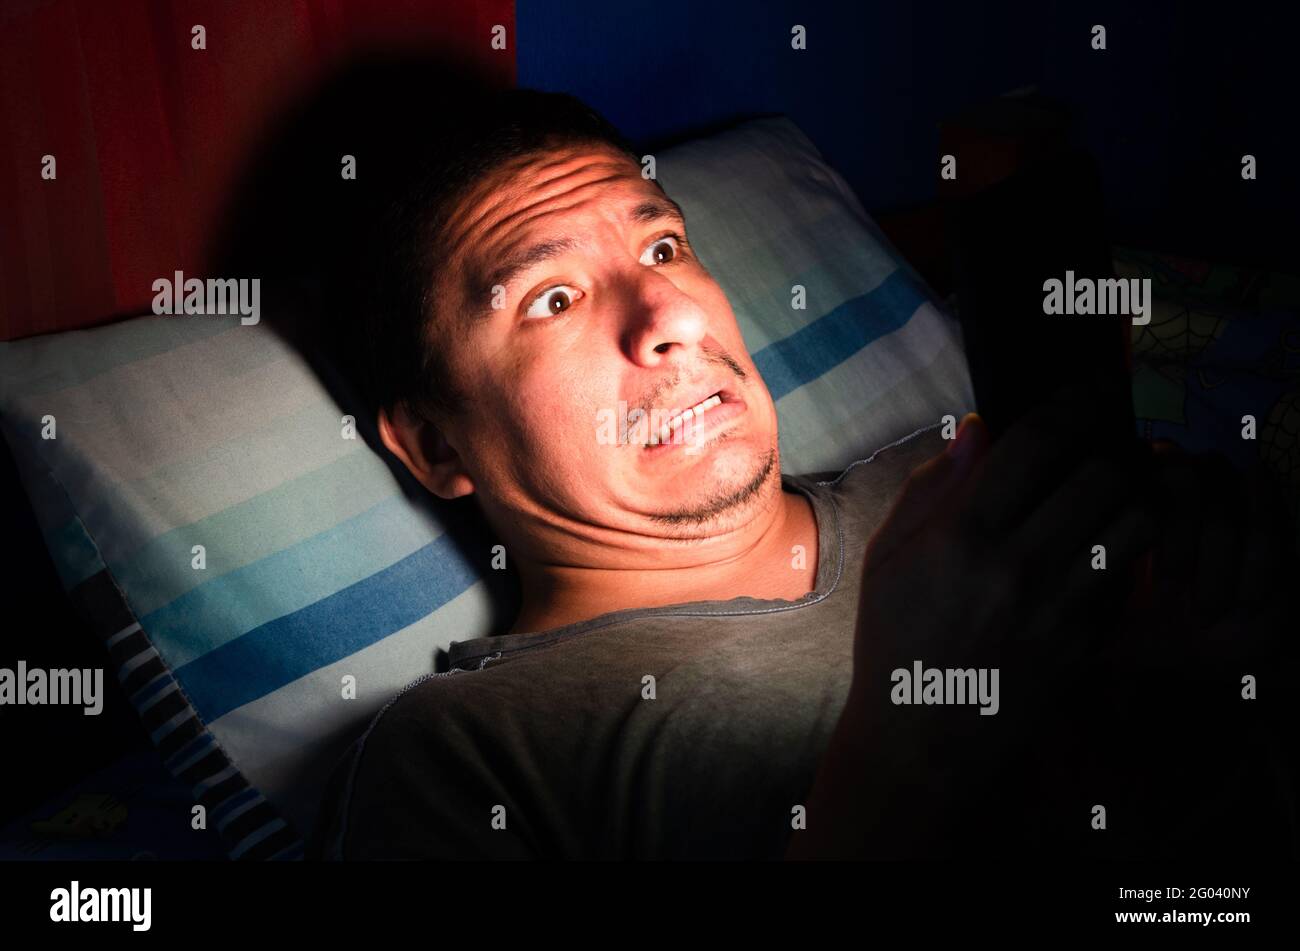 Anxious and awake man looks at his phone at night in the dark. Stock Photo